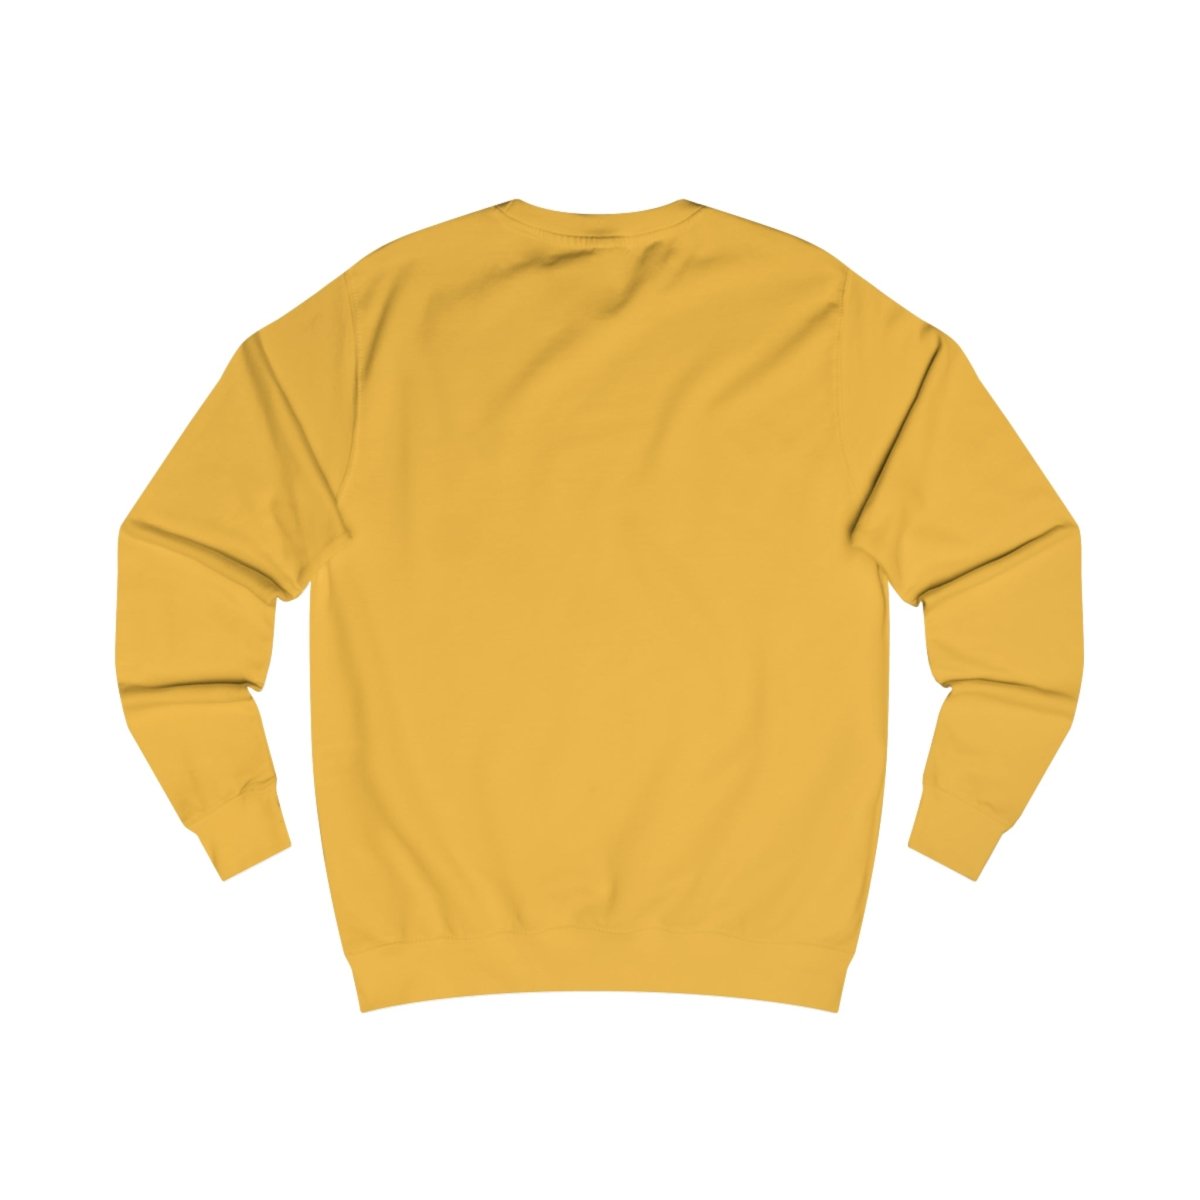 Royal Dog Men's Sweatshirt - Style C - DarzyStore